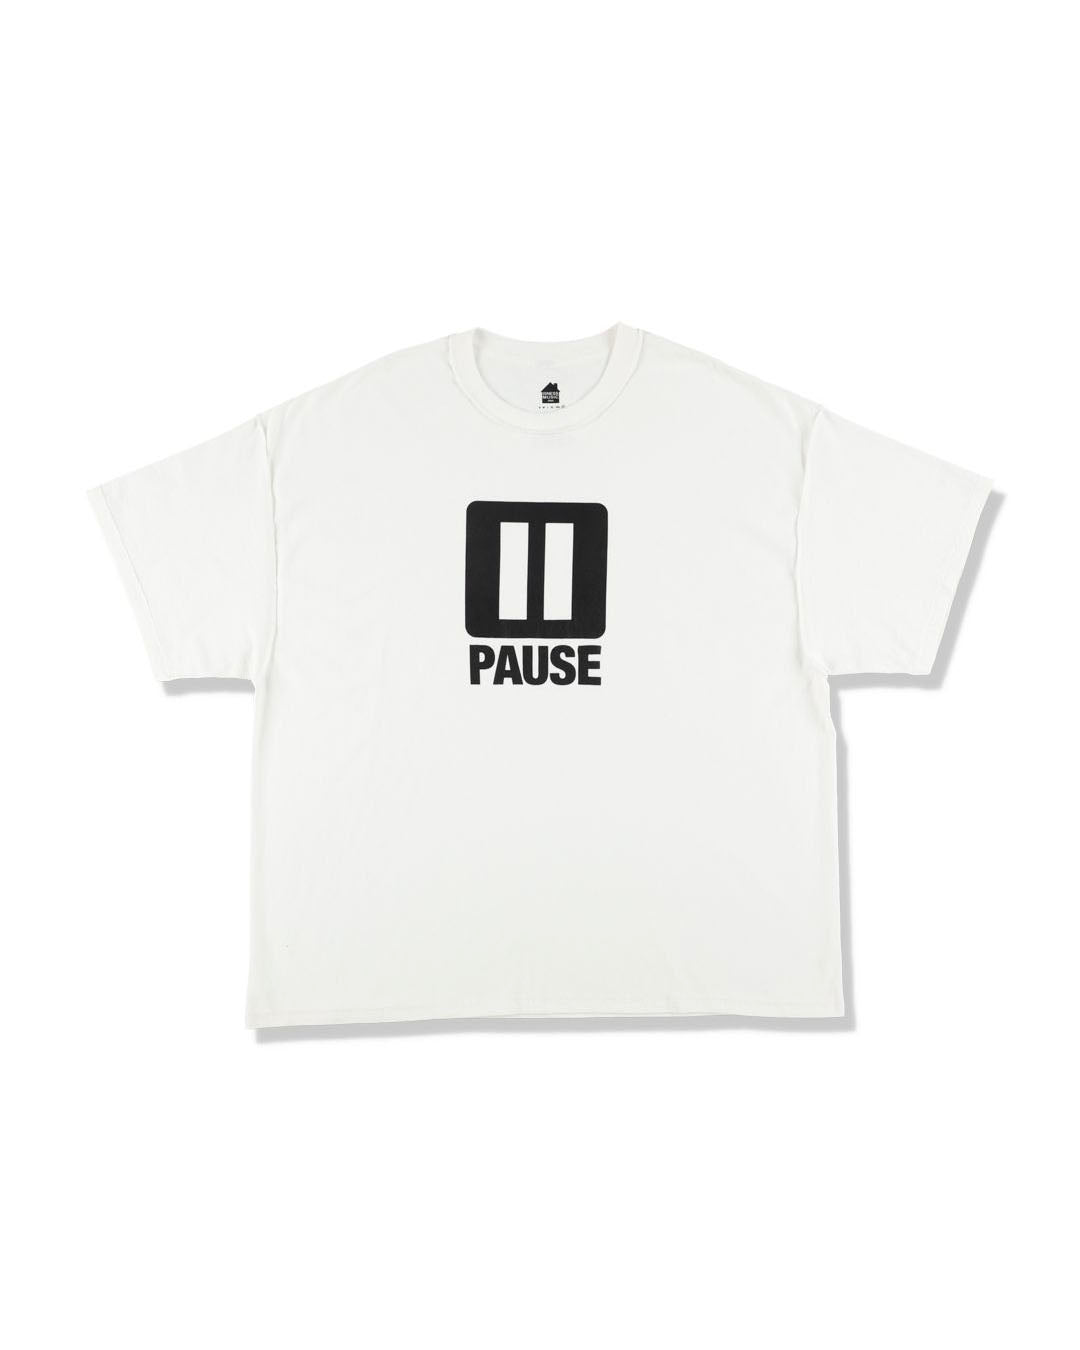 【ISNESS MUSIC】PAUSE T-SHIRT - WHITE